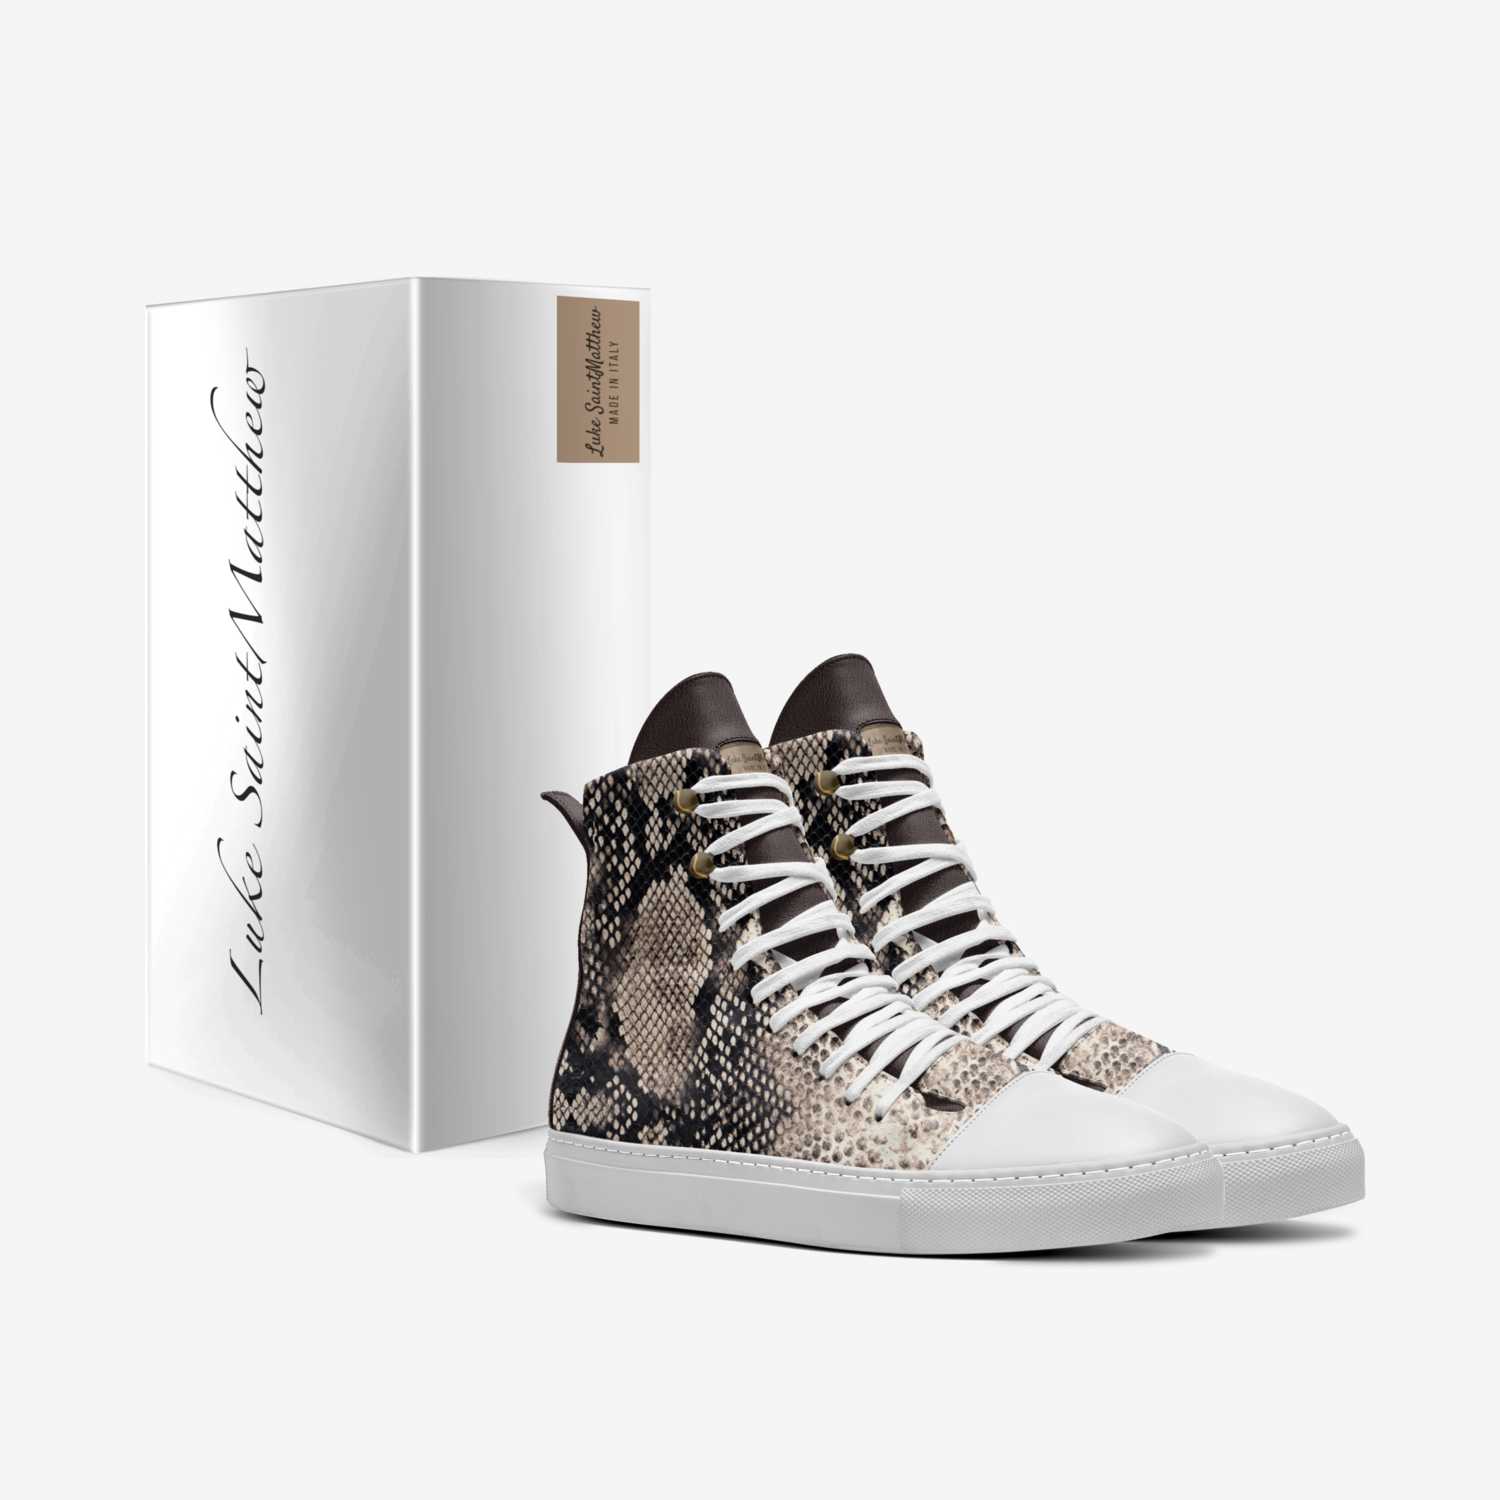 Luke SaintMatthew custom made in Italy shoes by Luke Saintmatthews | Box view